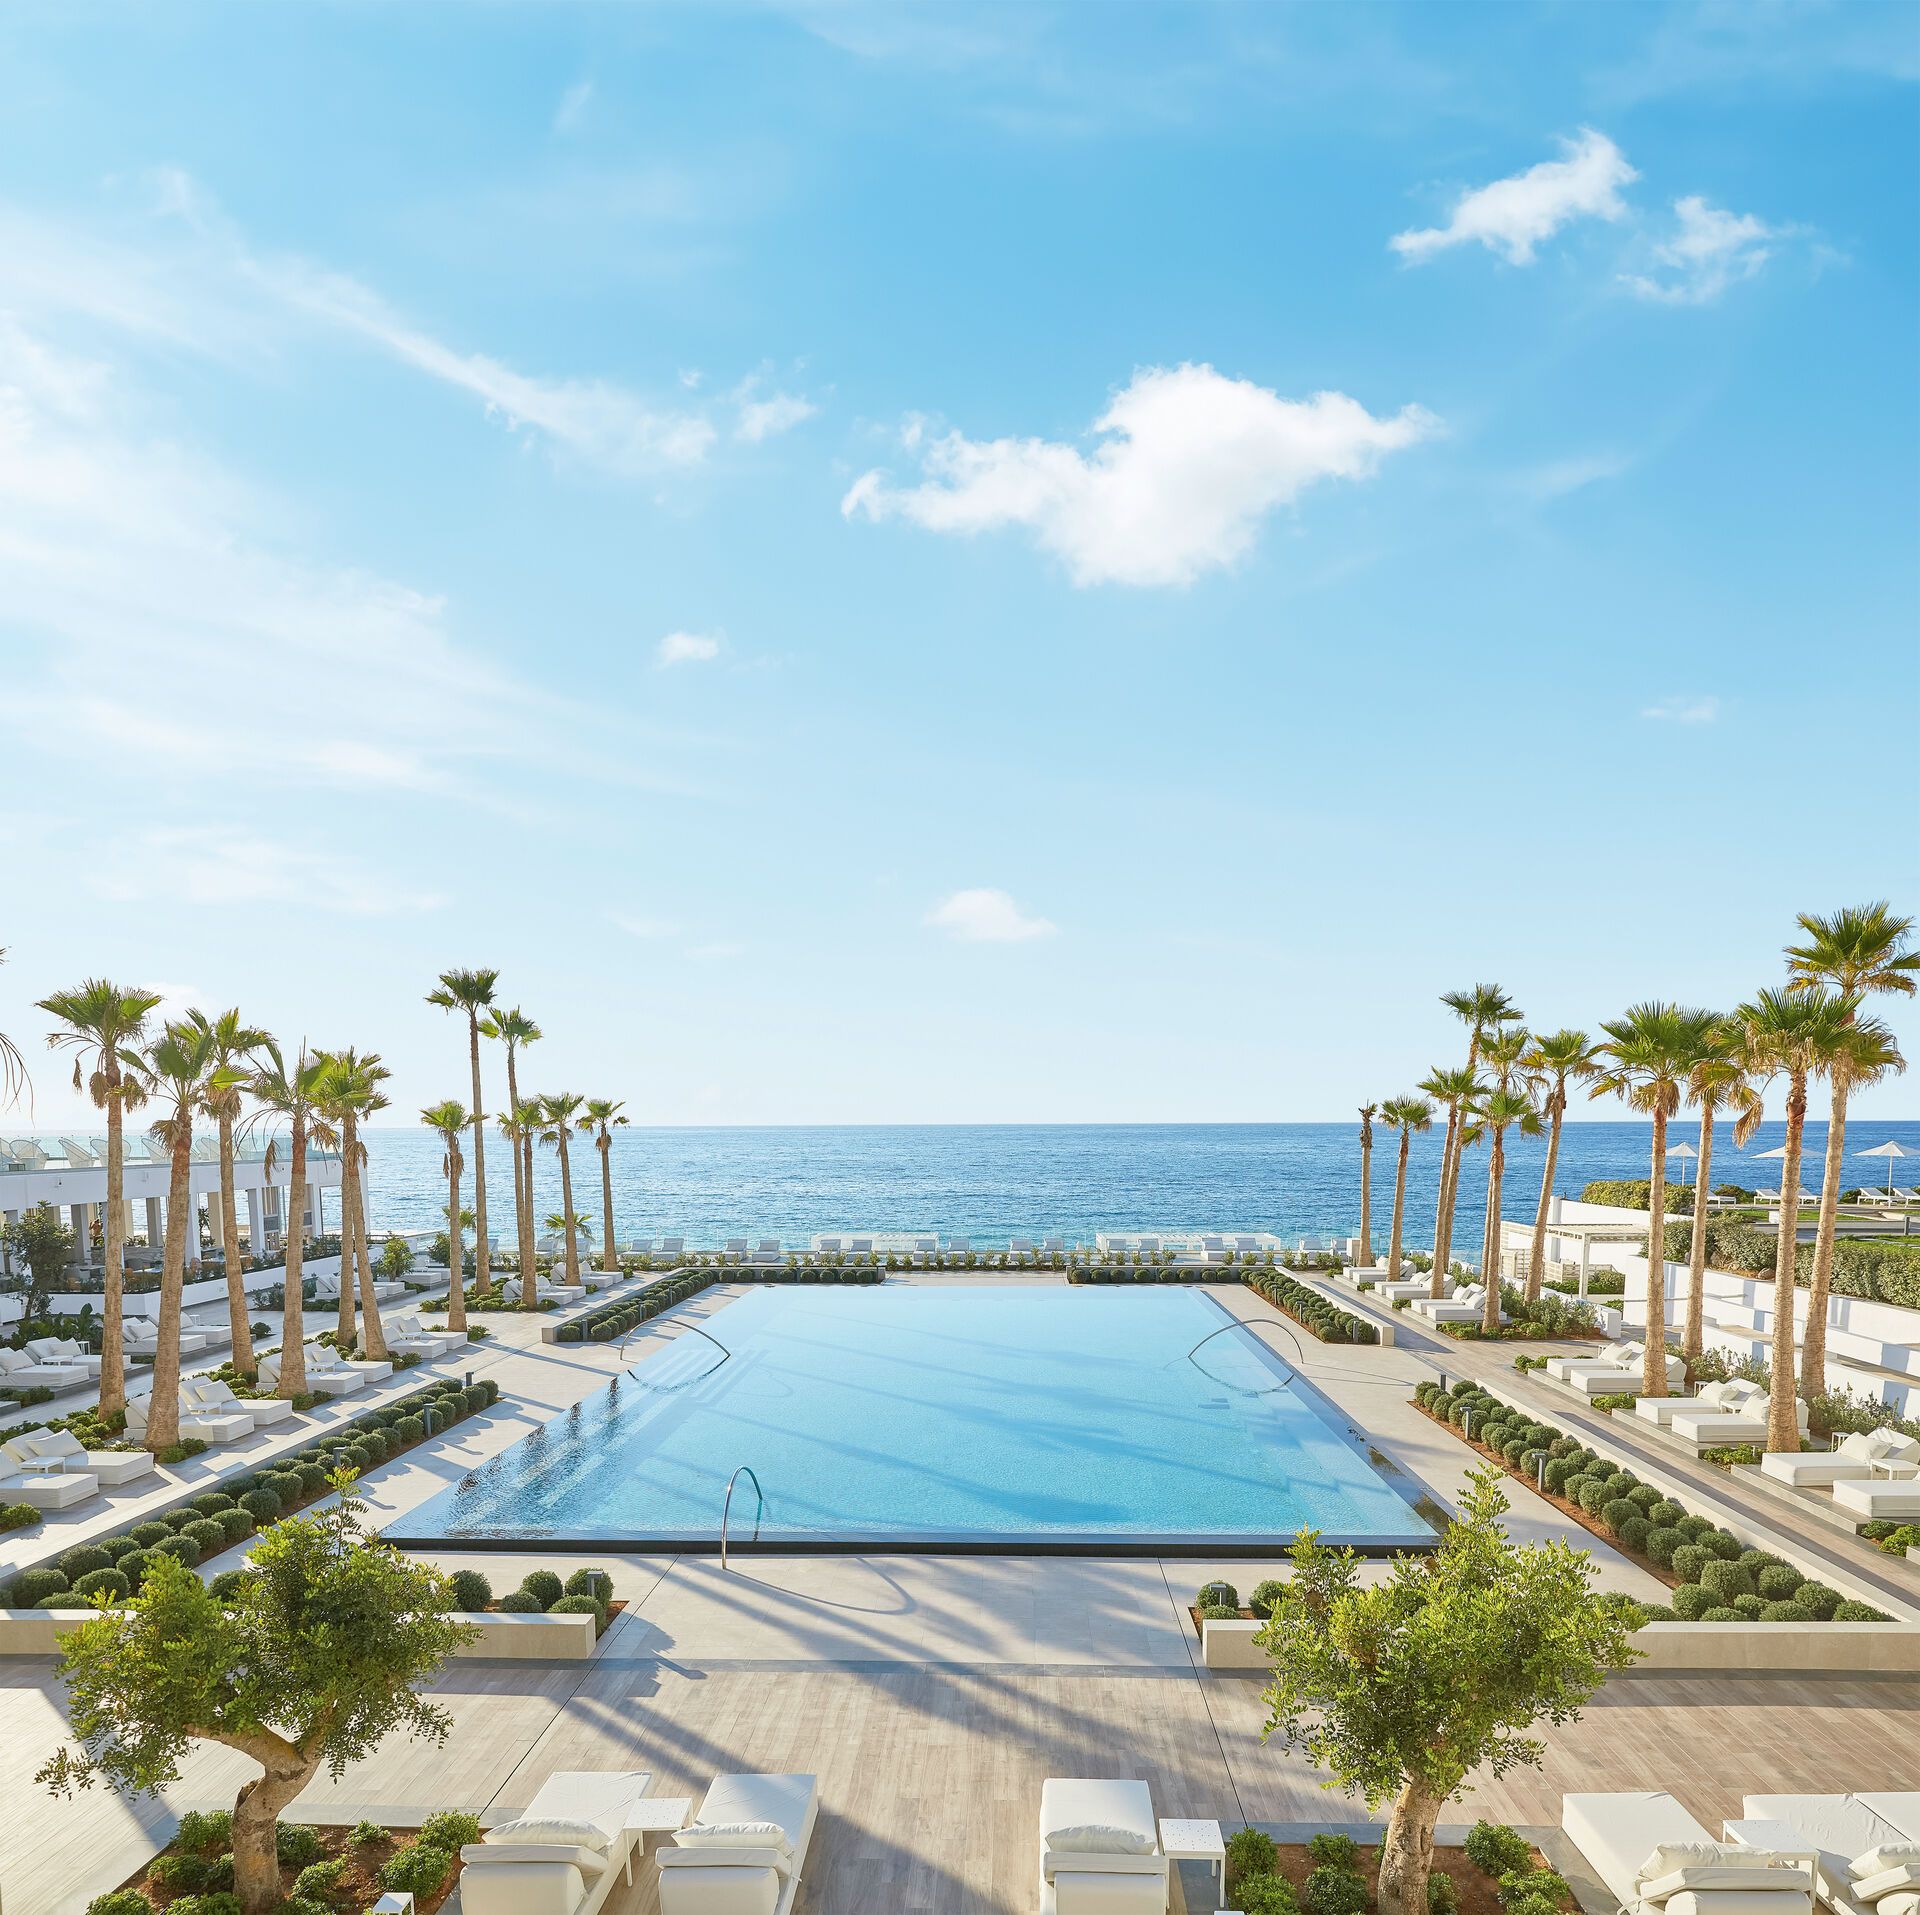 Crète - Rethymnon - Grèce - Iles grecques - Hotel Grecotel Lux Me White Palace 5*